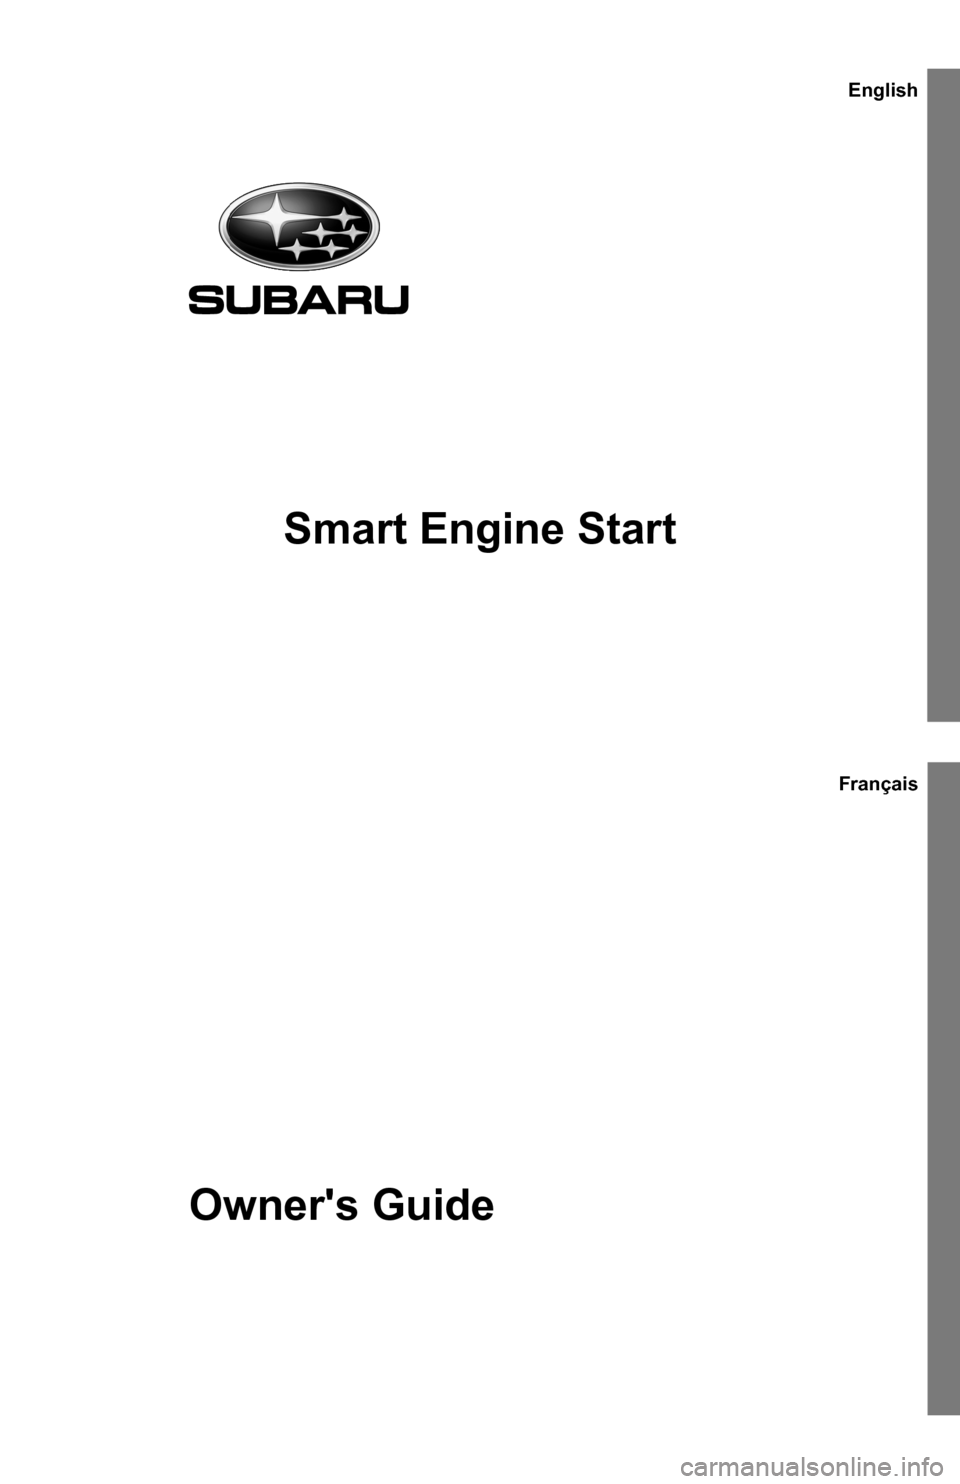 SUBARU IMPREZA 2015 4.G Smart Engine Start Guide Smart Engine Start
Owners Guide
English
Français  